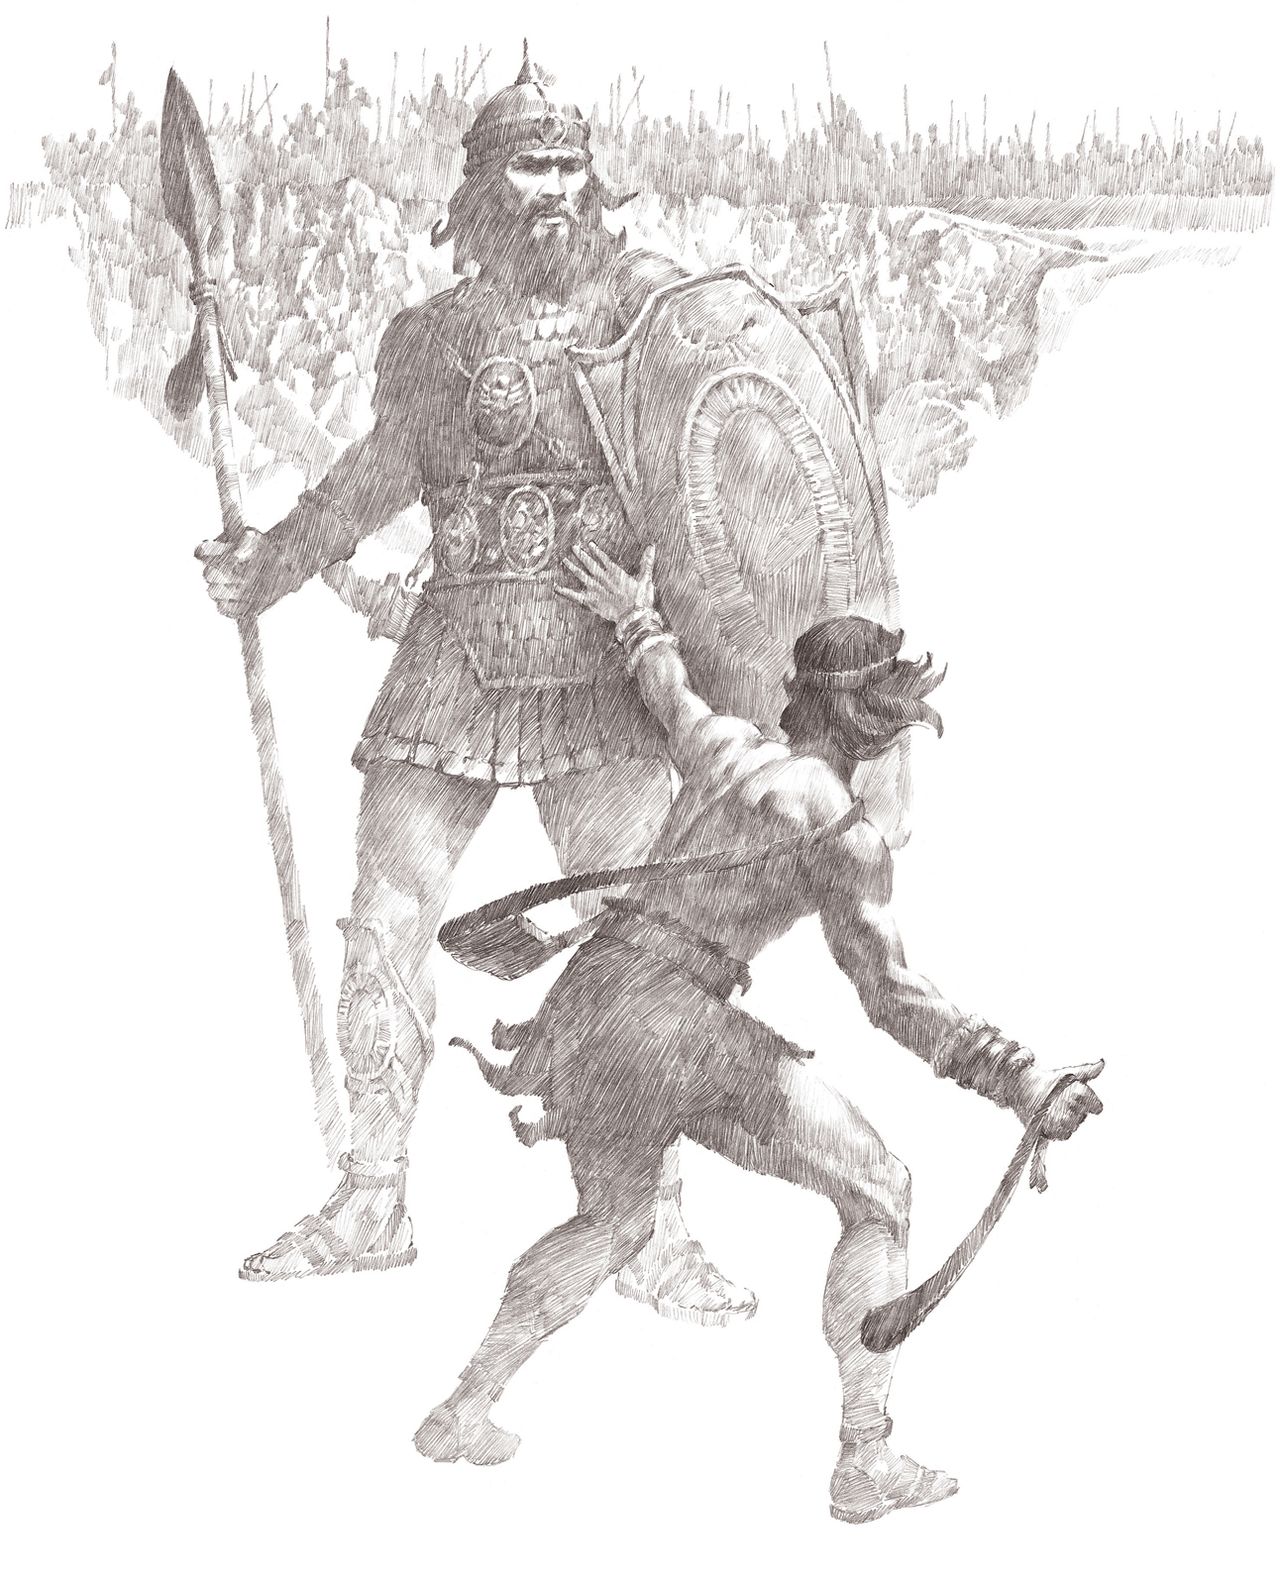 Pencil drawing of David preparing to sling a stone at Goliath.